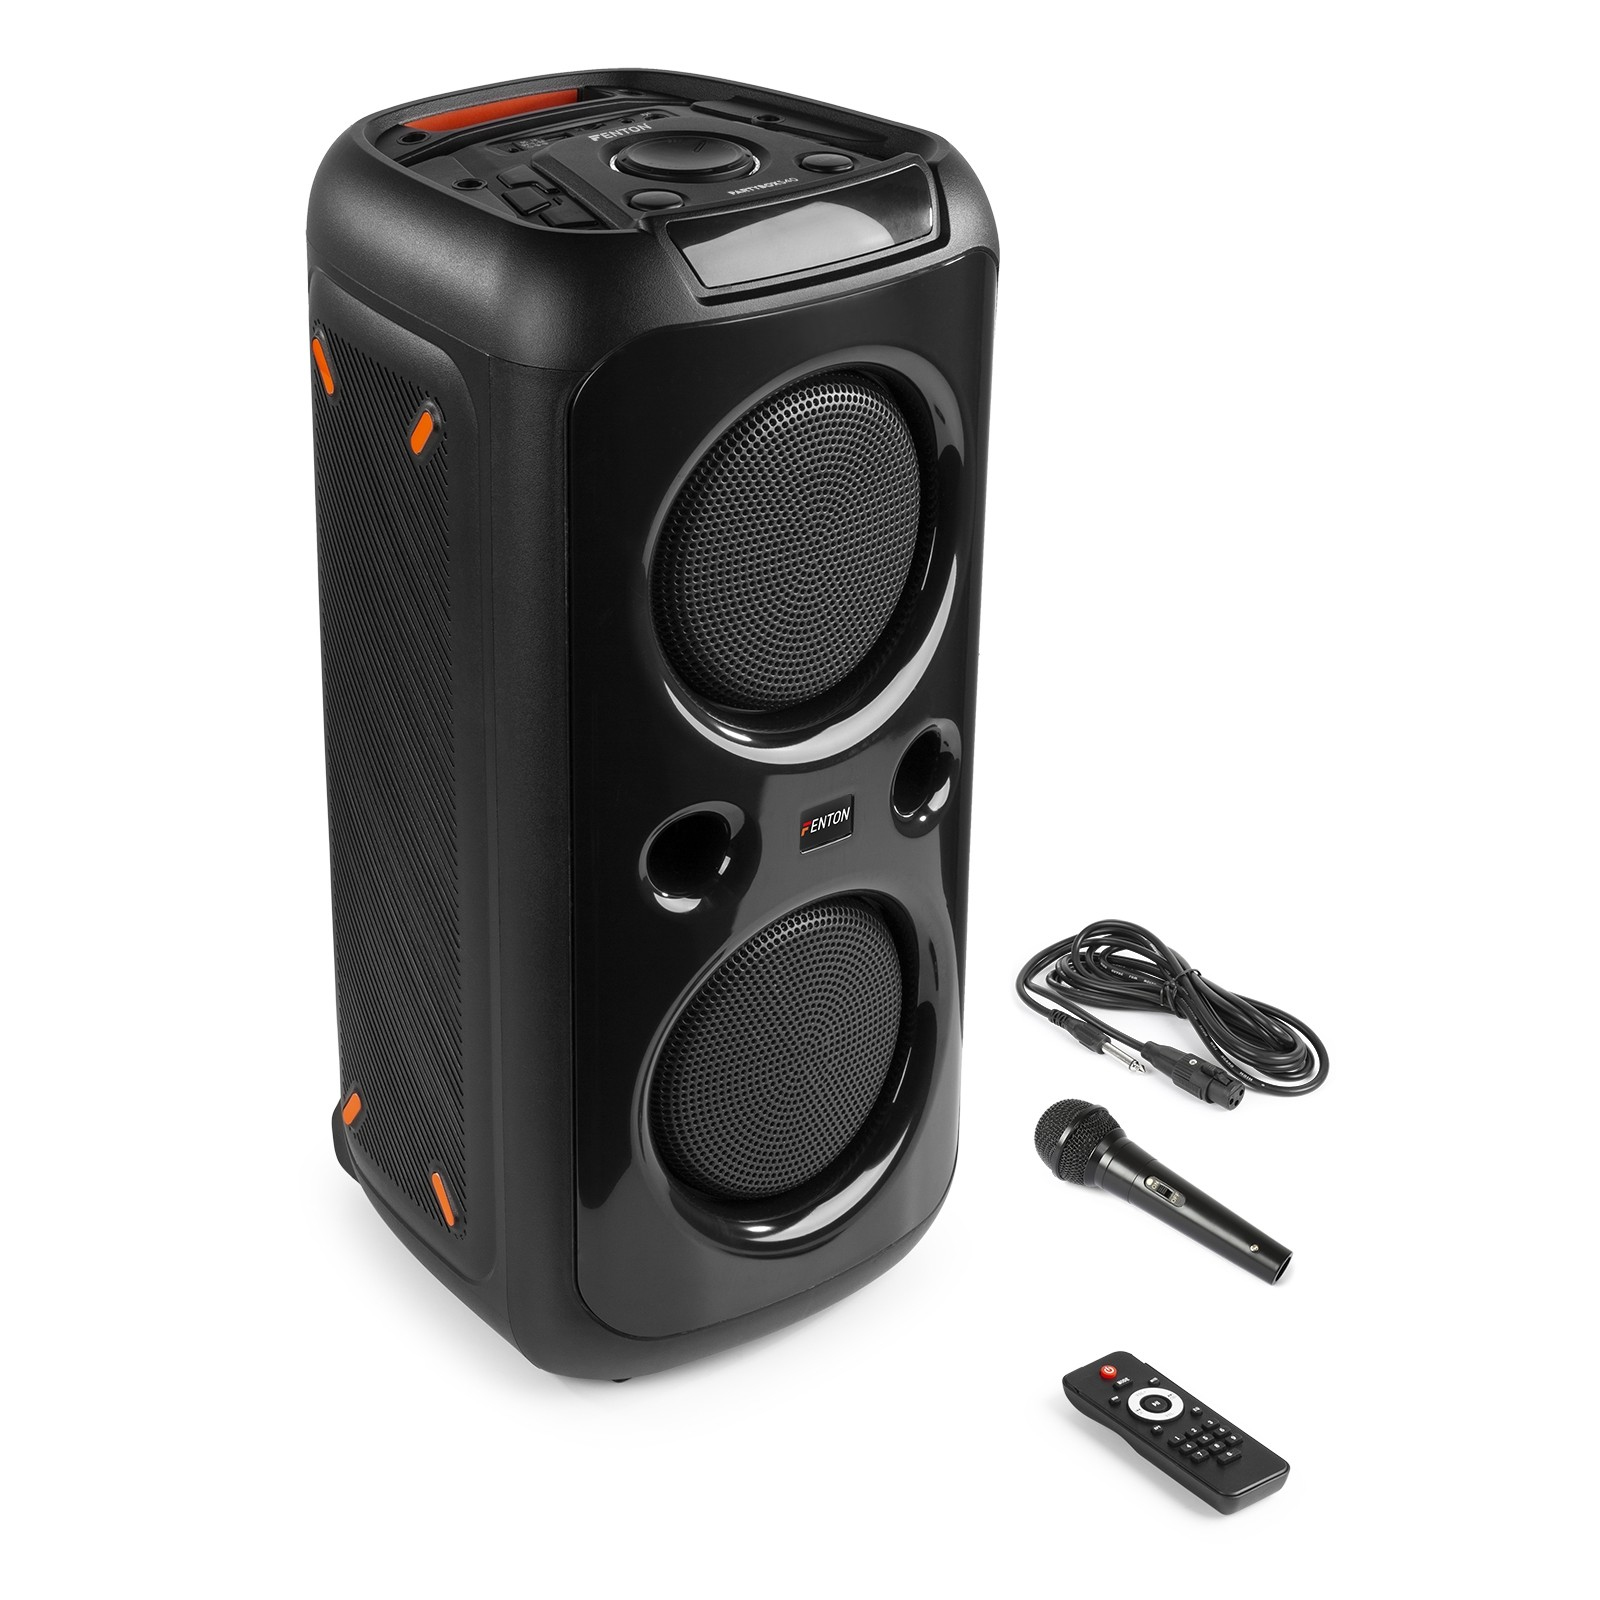 FENTON BOOMBOX540 Party Speaker Επαναφορτ. 2x 8'' - 240 Watt Max FM/ AUX/ microSD/ USB/ BT 178.376